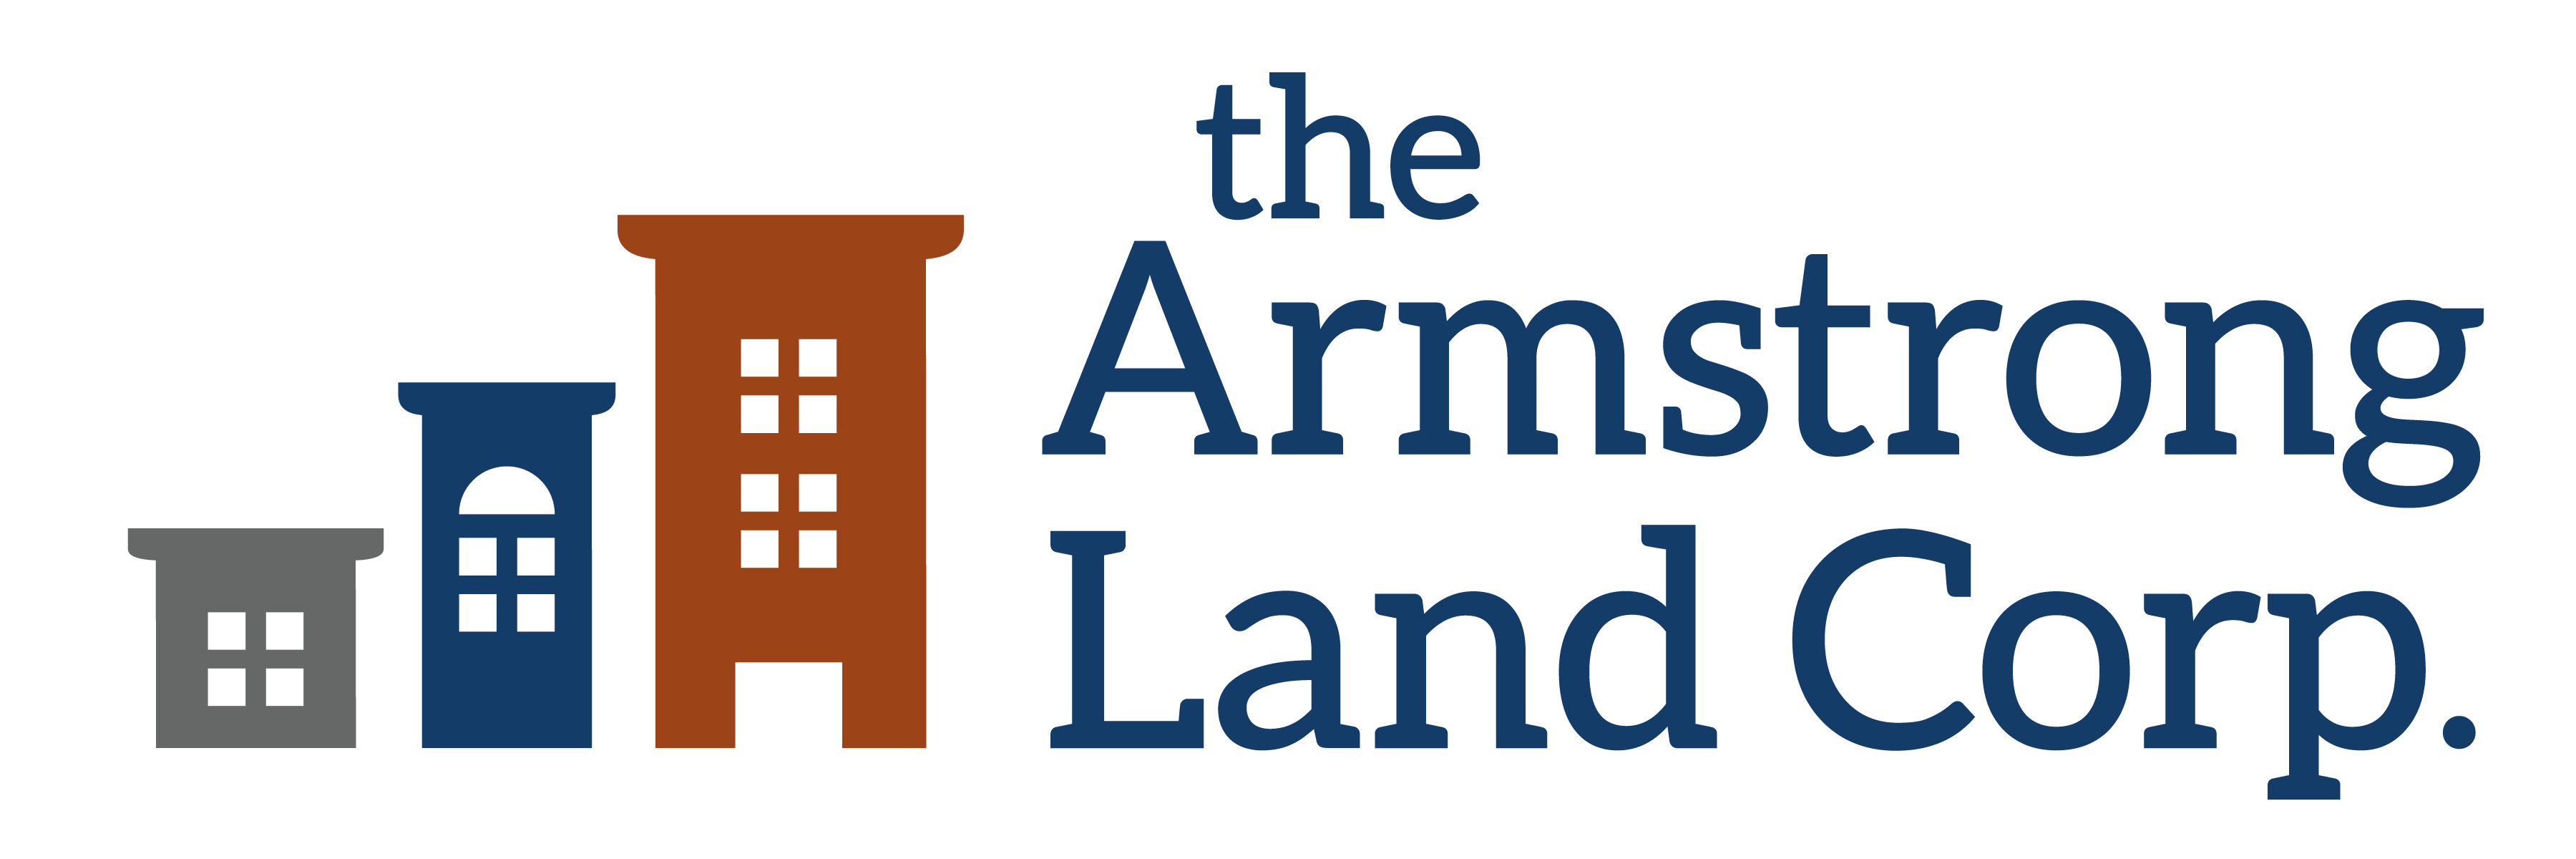 Armstrong land corp logo